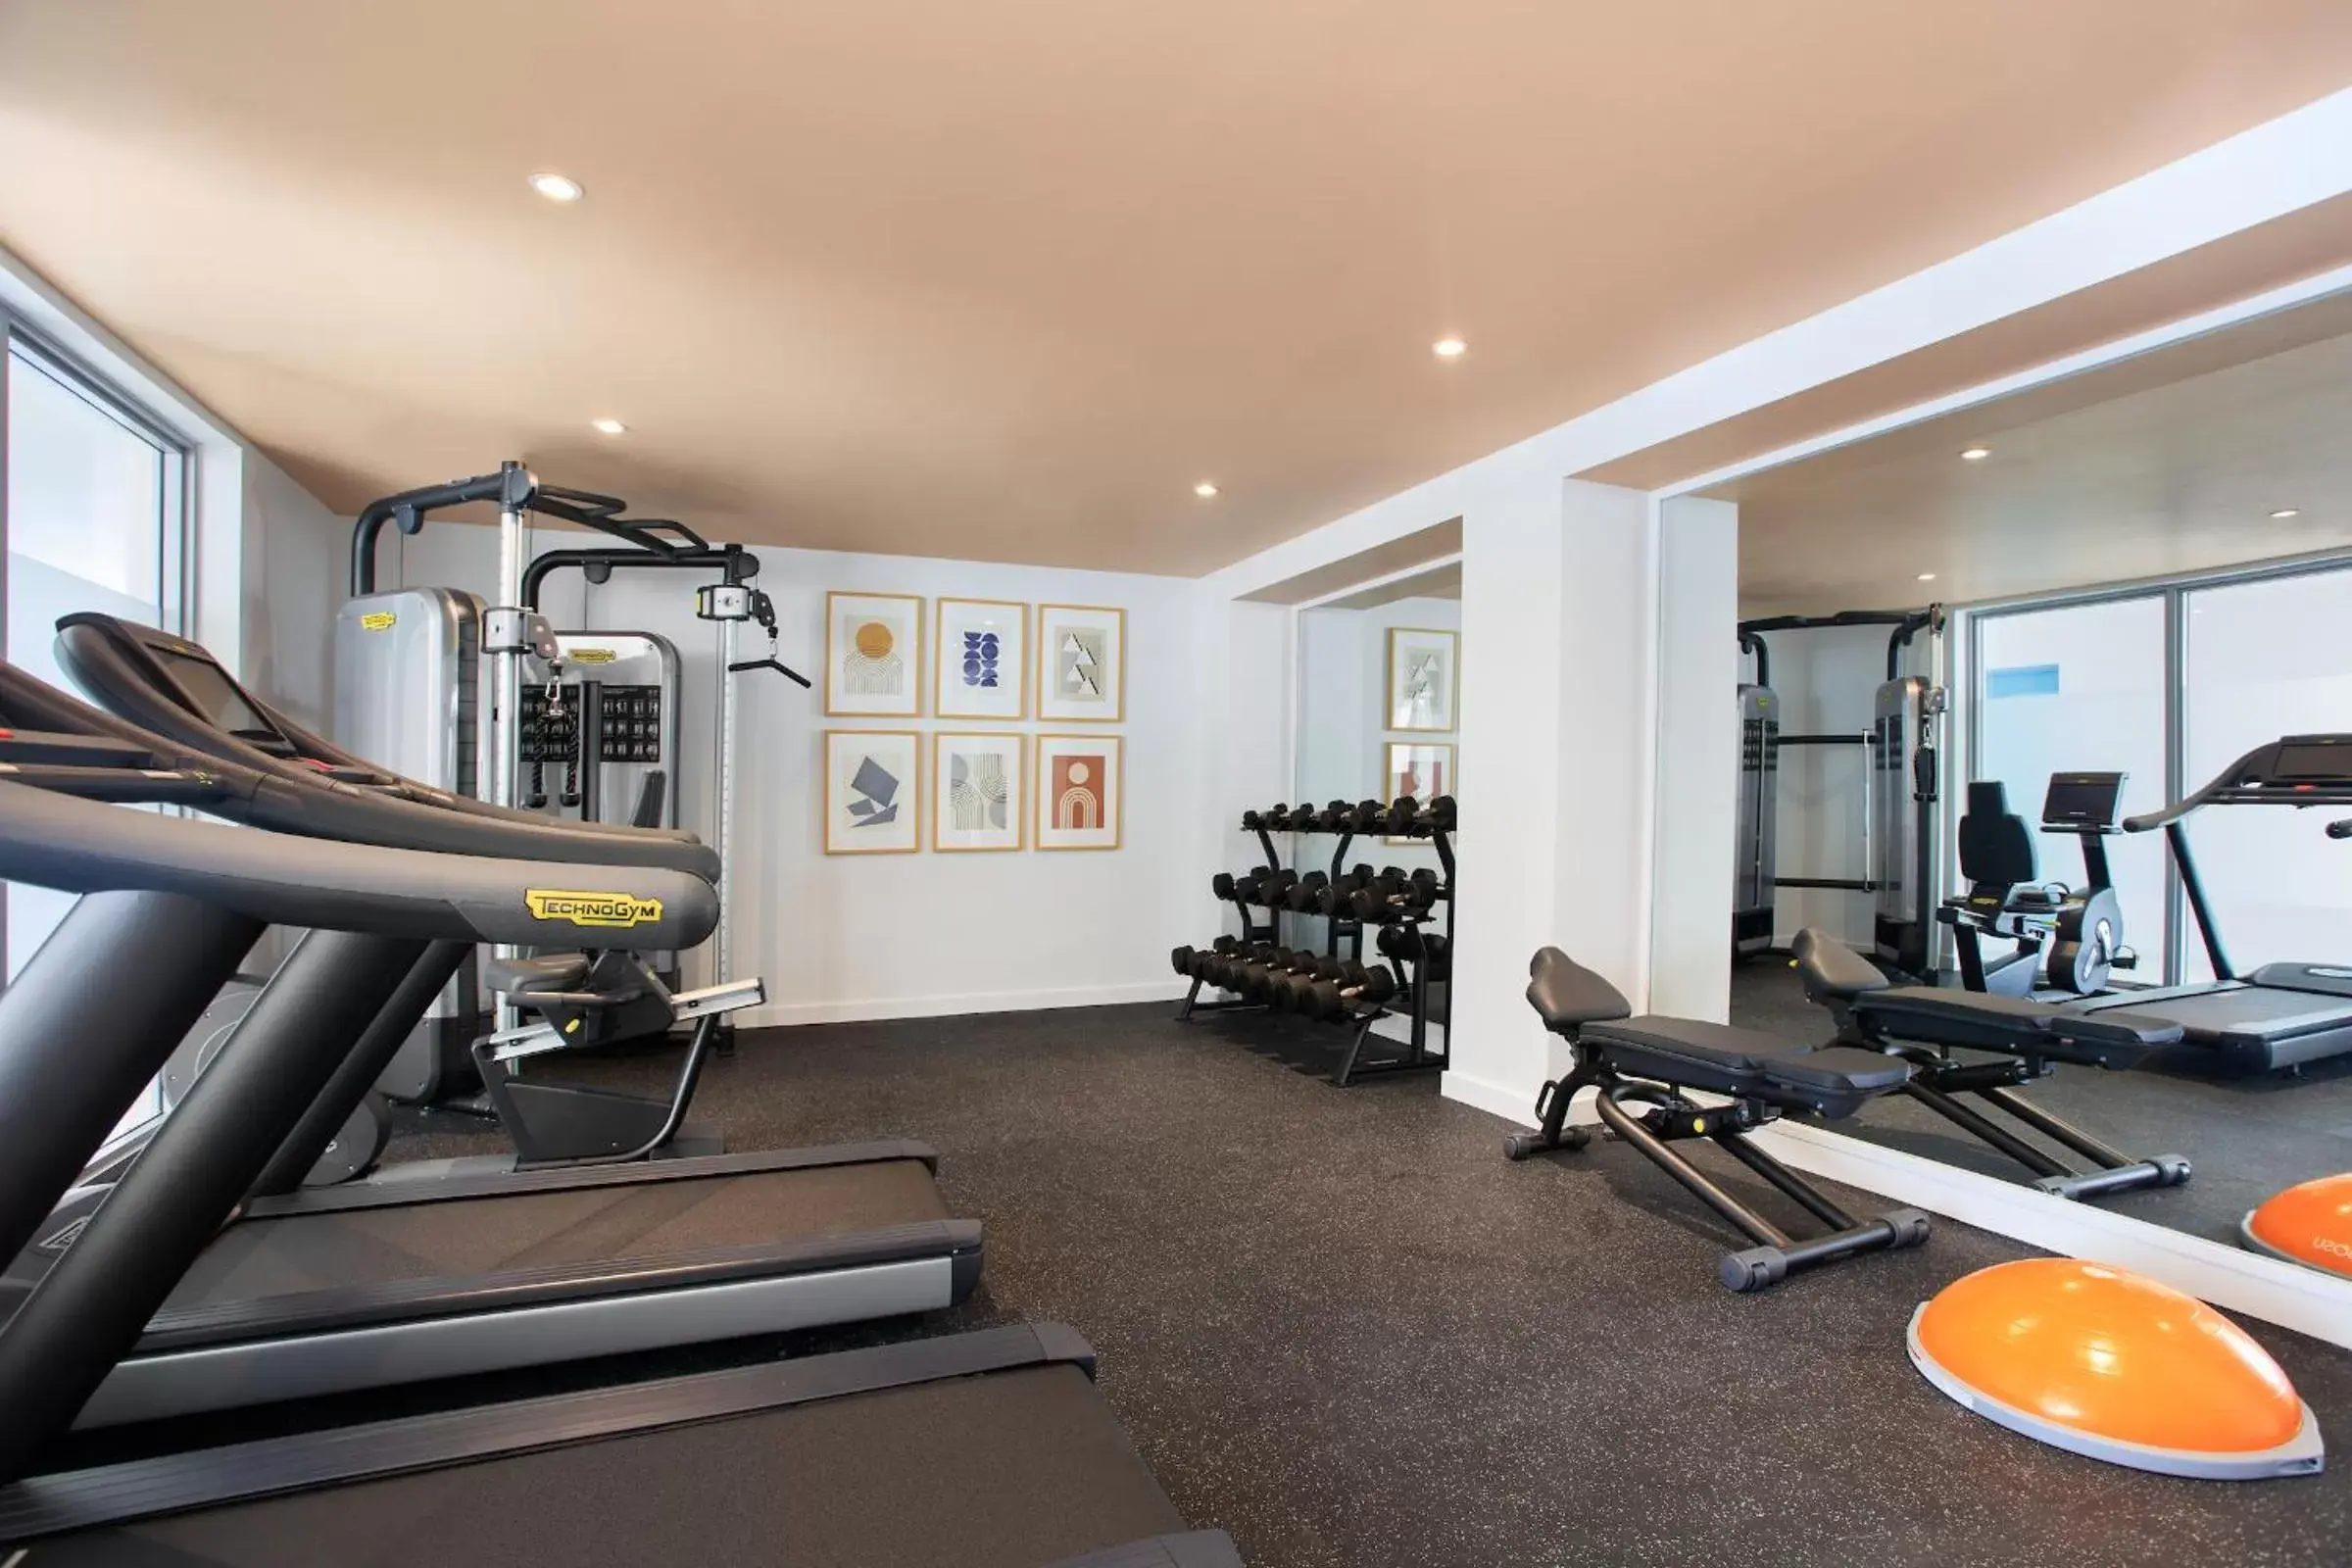 Fitness centre/facilities, Fitness Center/Facilities in The Kimpton Shorebreak Fort Lauderdale Beach Resort